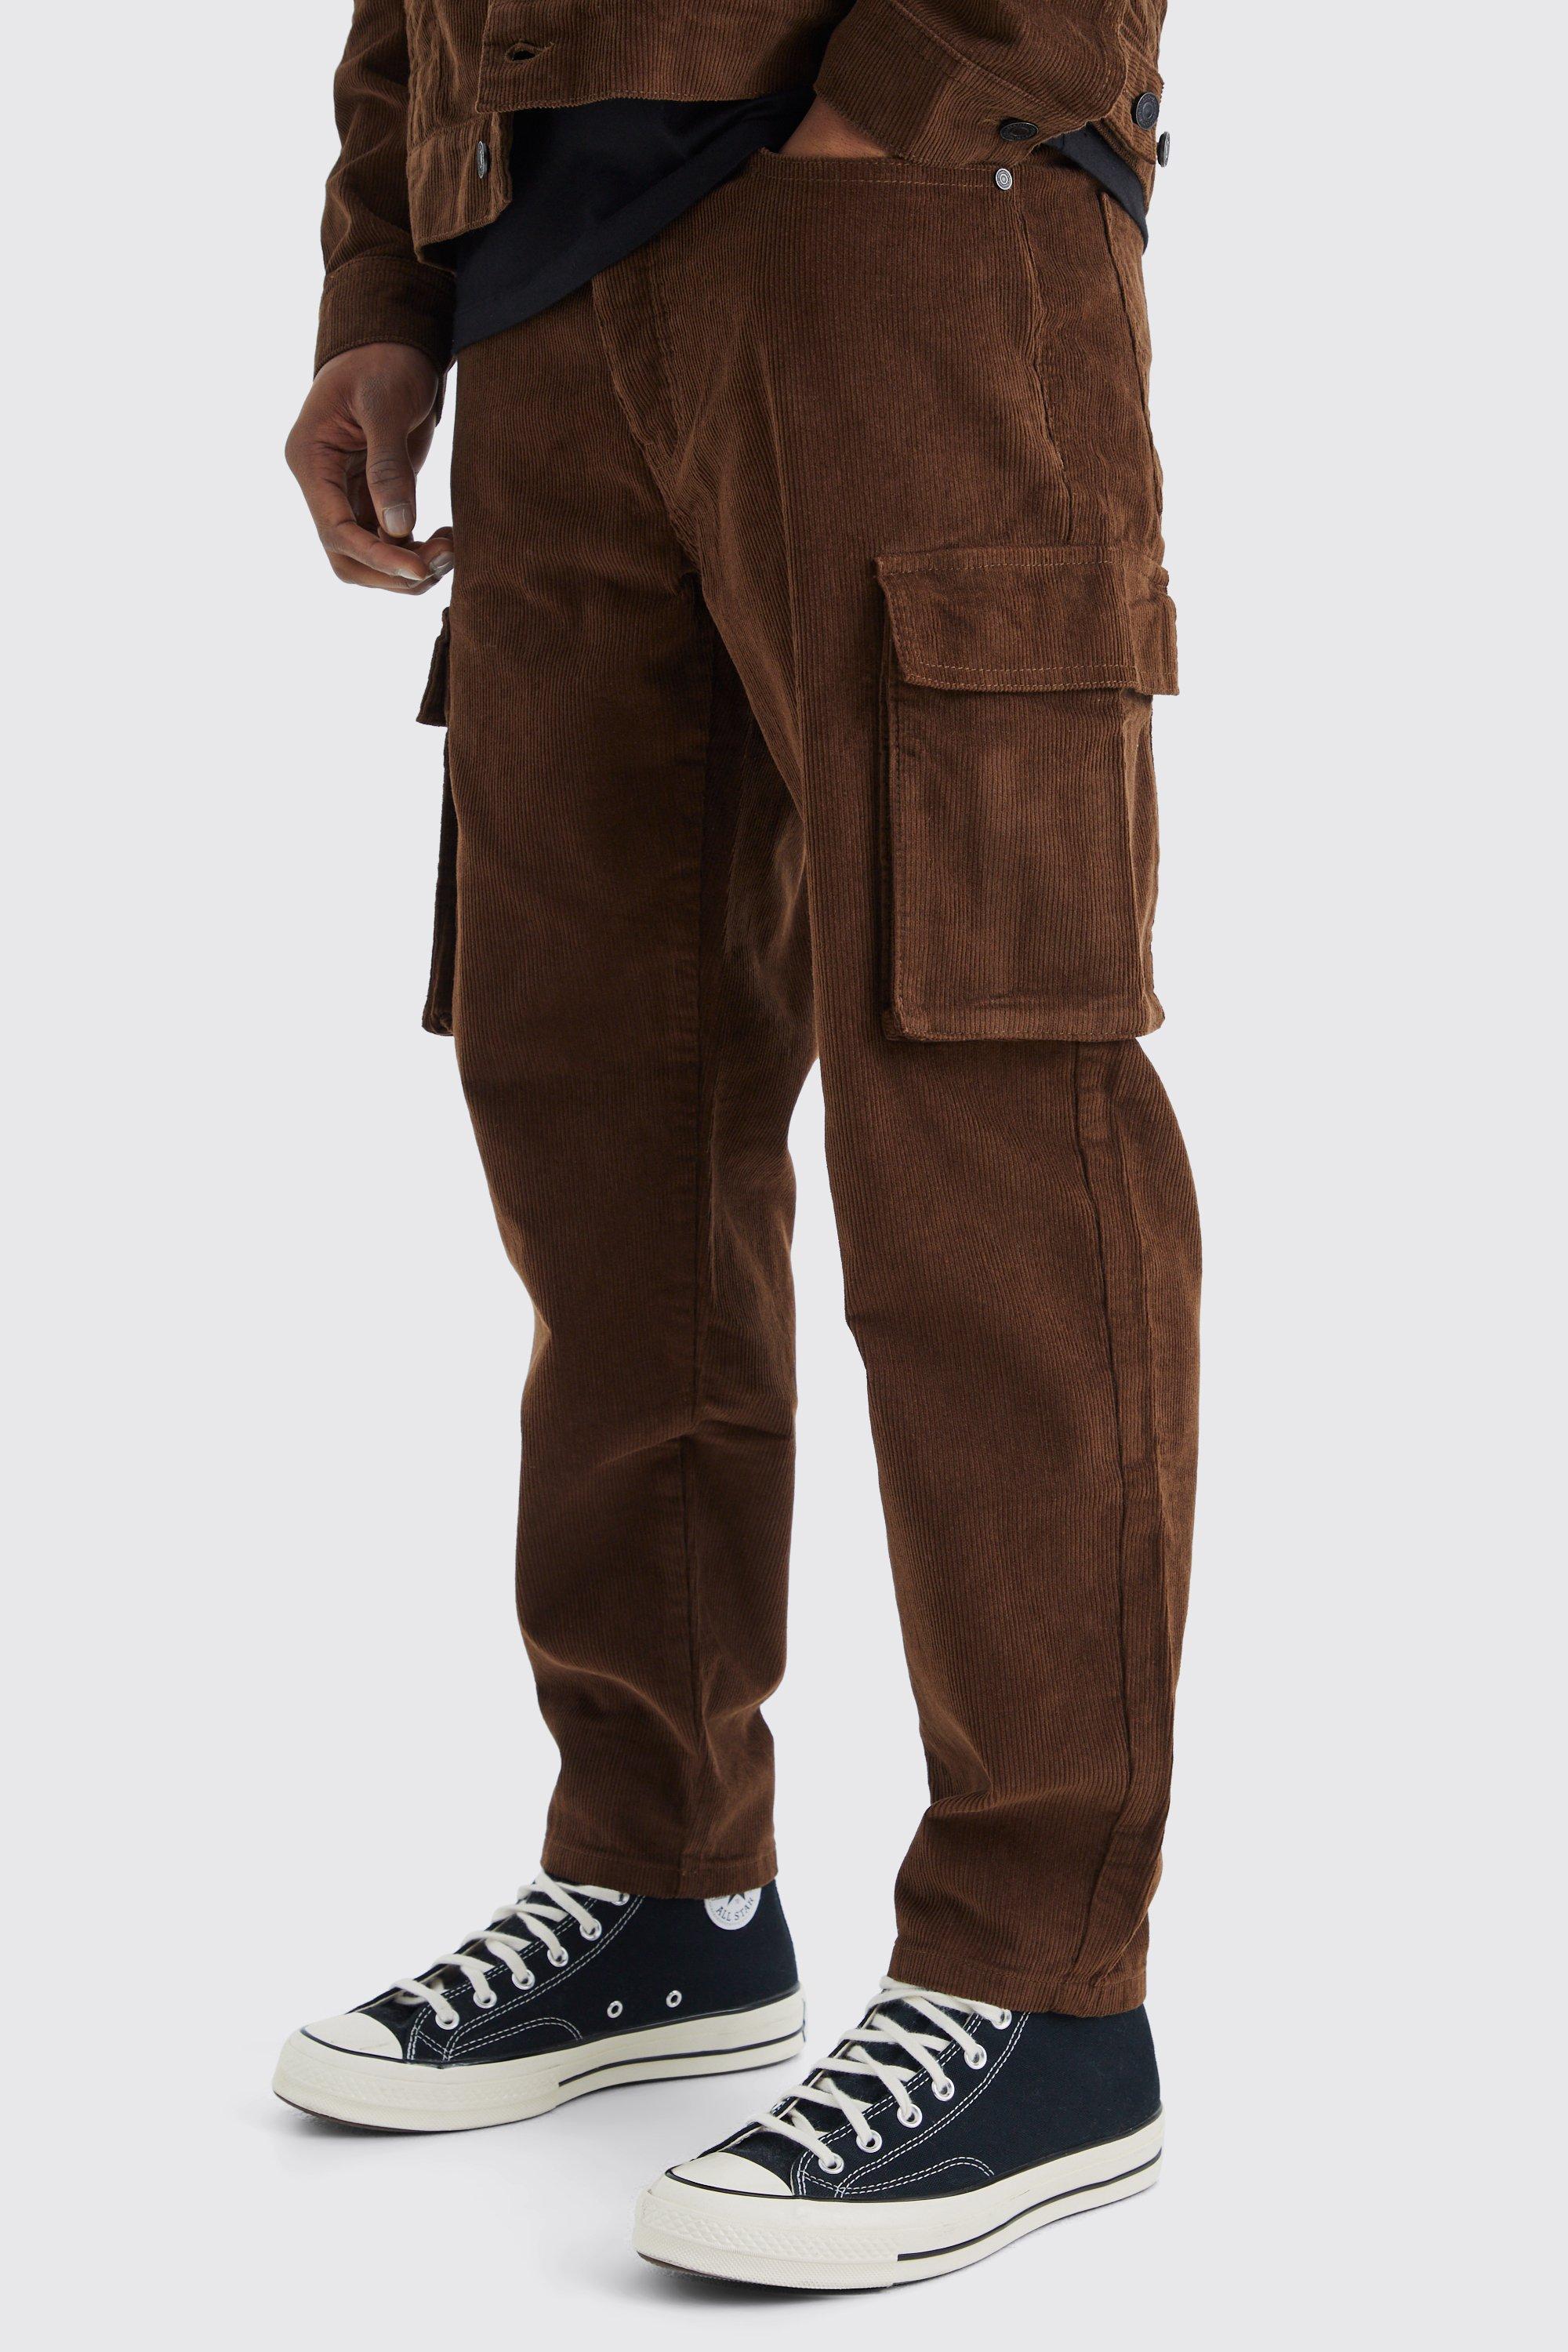 pantalon cargo côtelé homme - brun - 28, brun